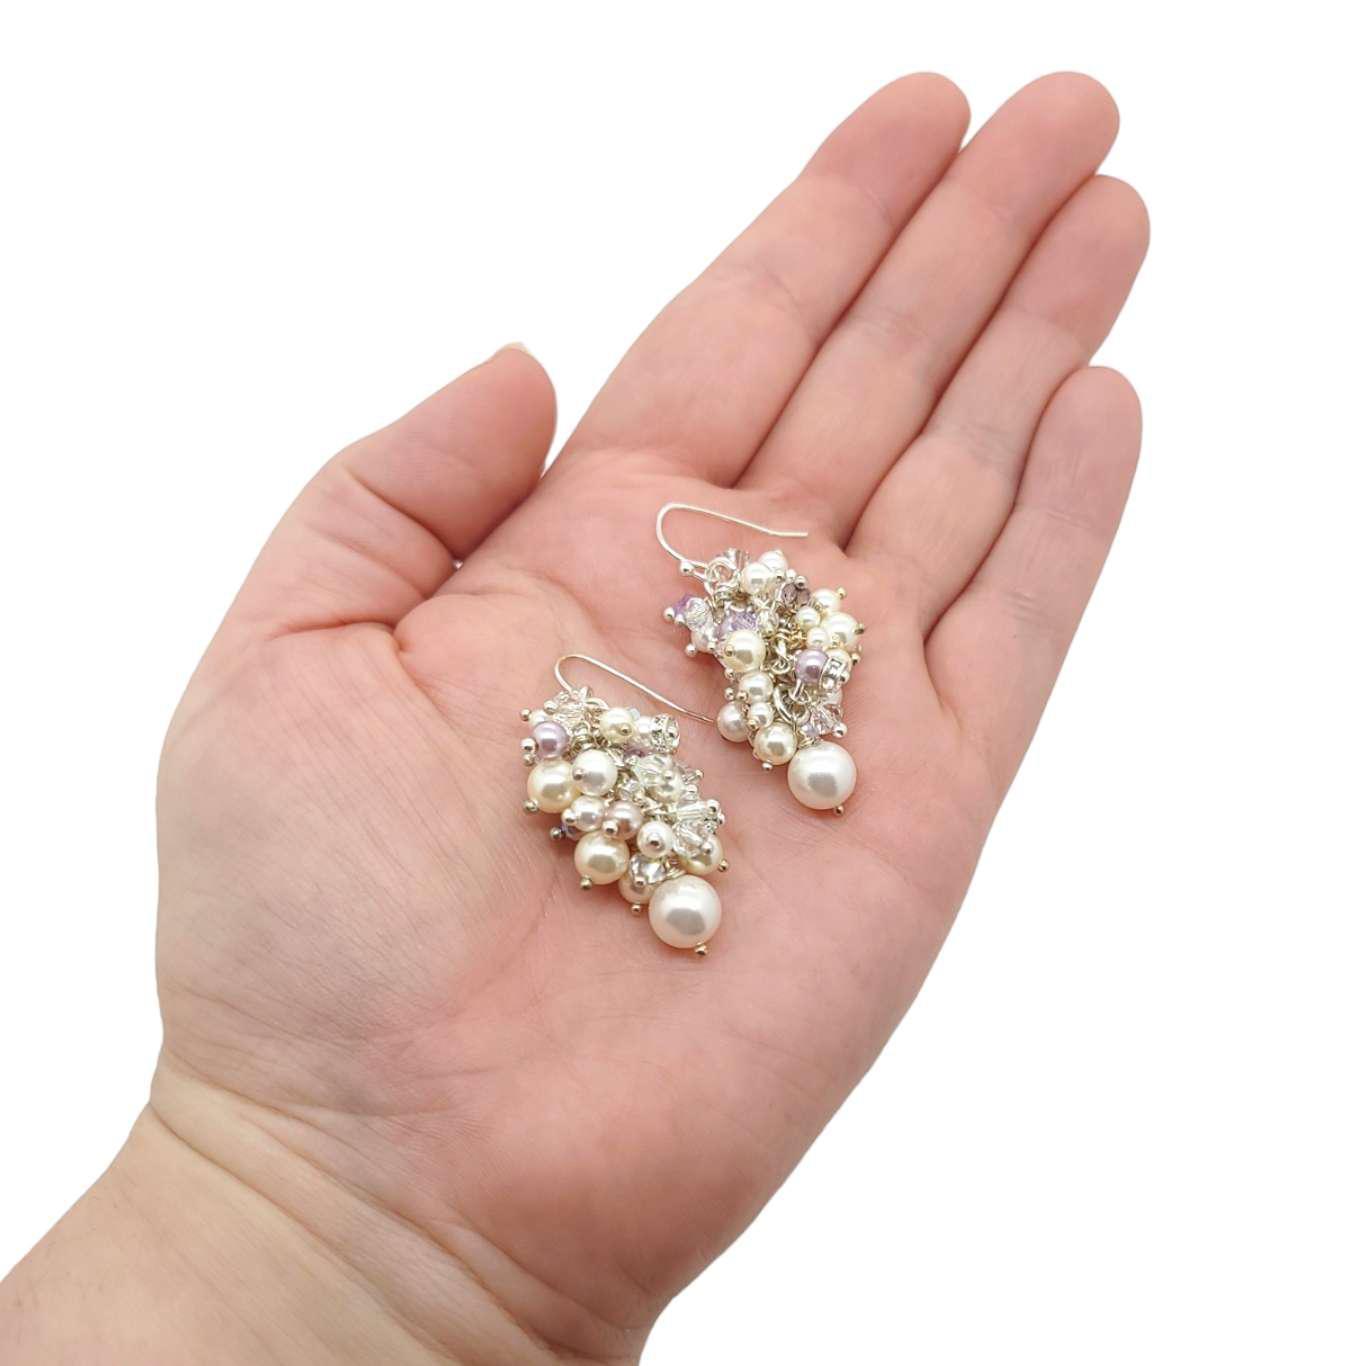 Earrings - Amethyst and White Pearl and Crystal Clusters by Sugar Sidewalk